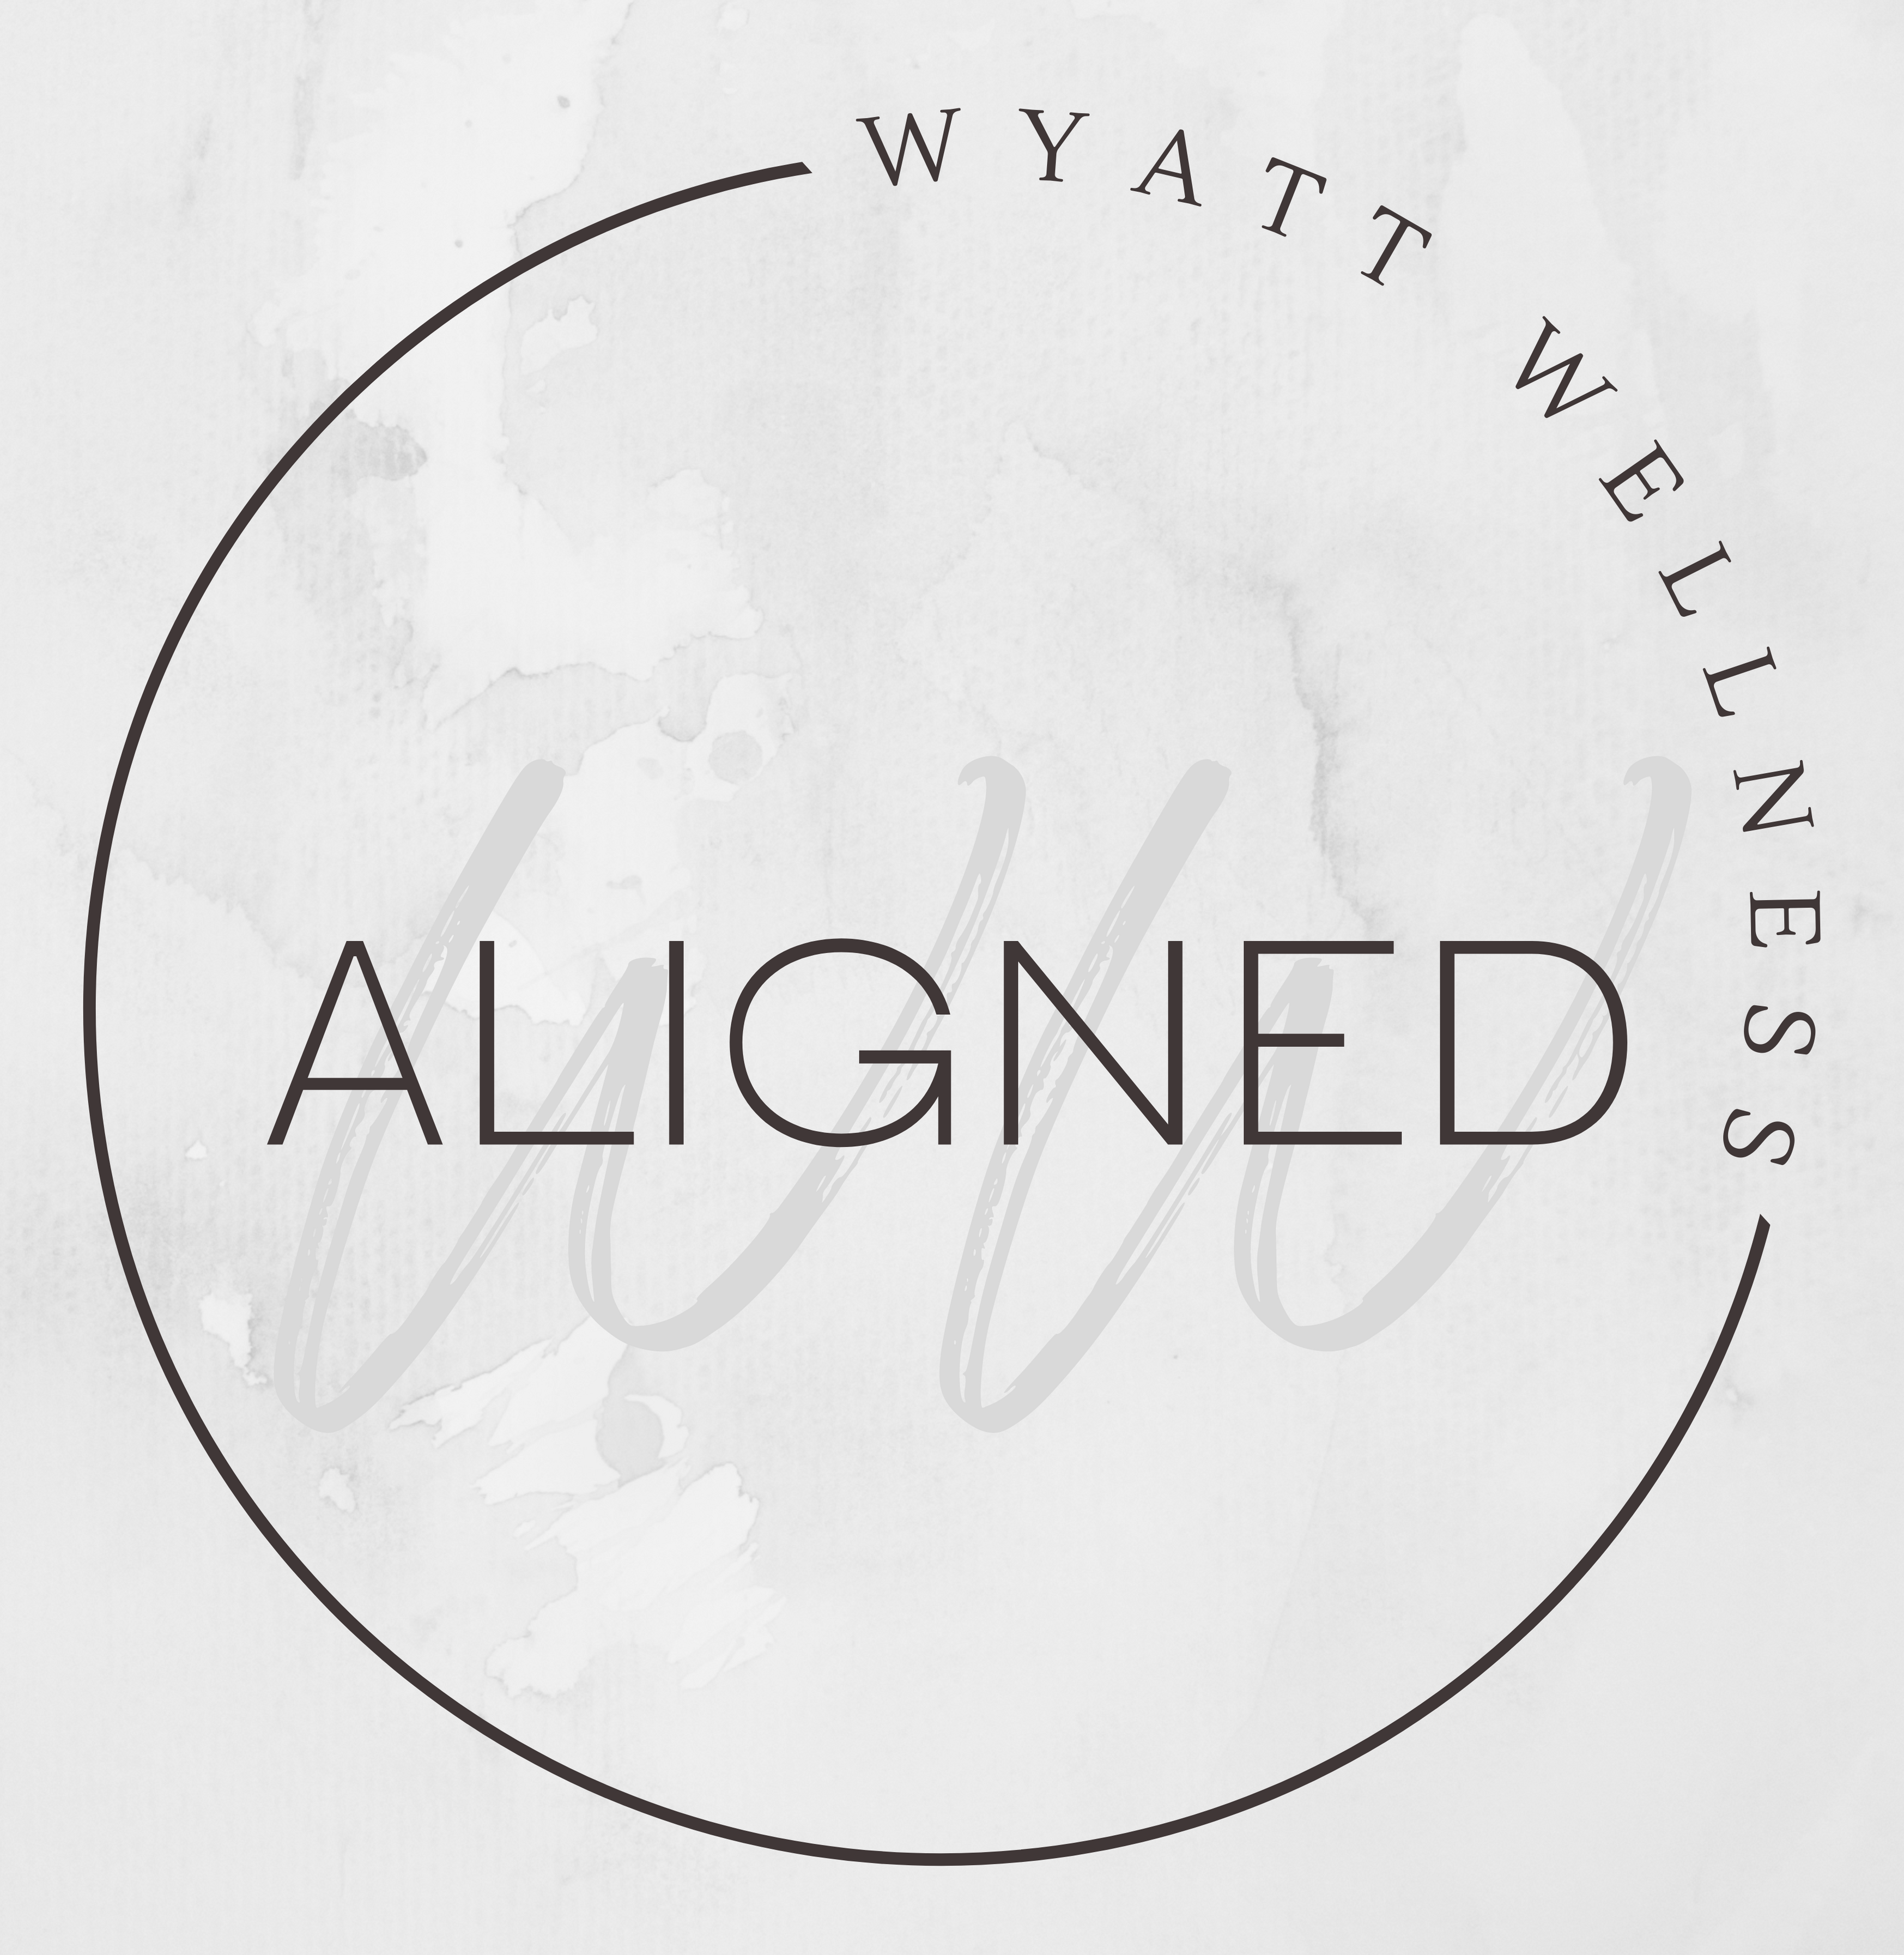 Aligned Wyatt Wellness